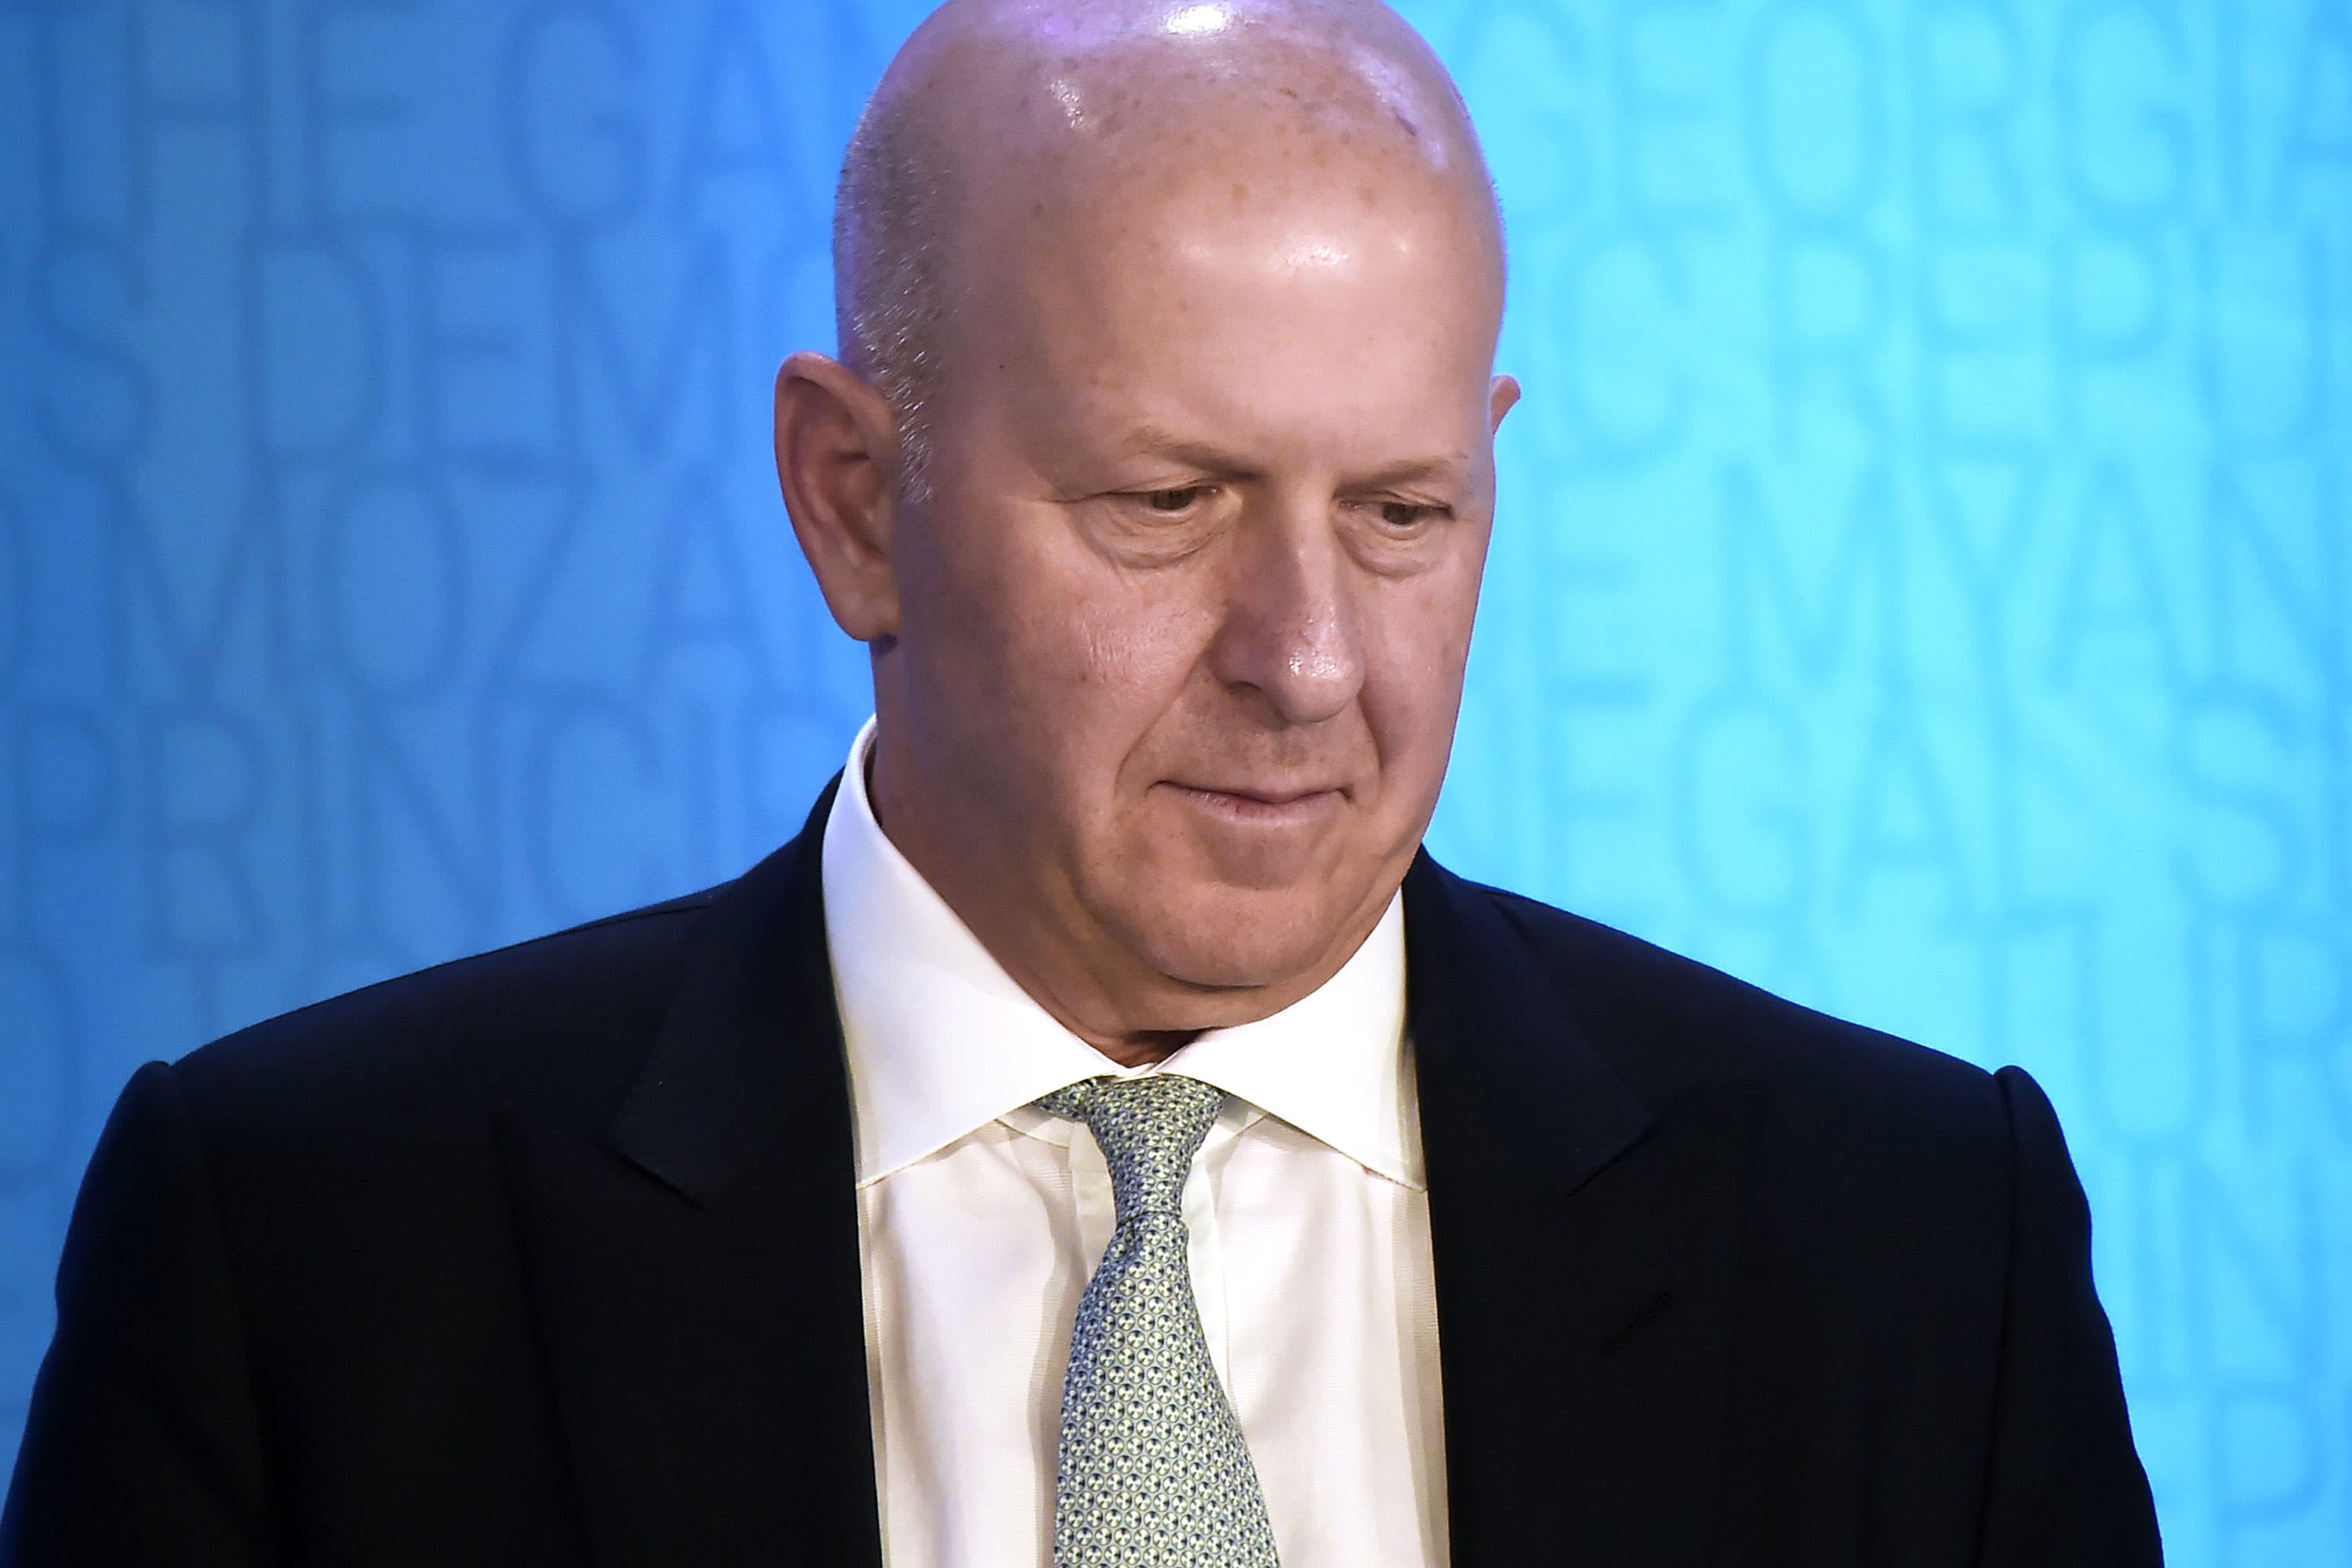 David Solomon, CEO of Goldman Sachs, gets $ 10 million salary cut over 1MDB